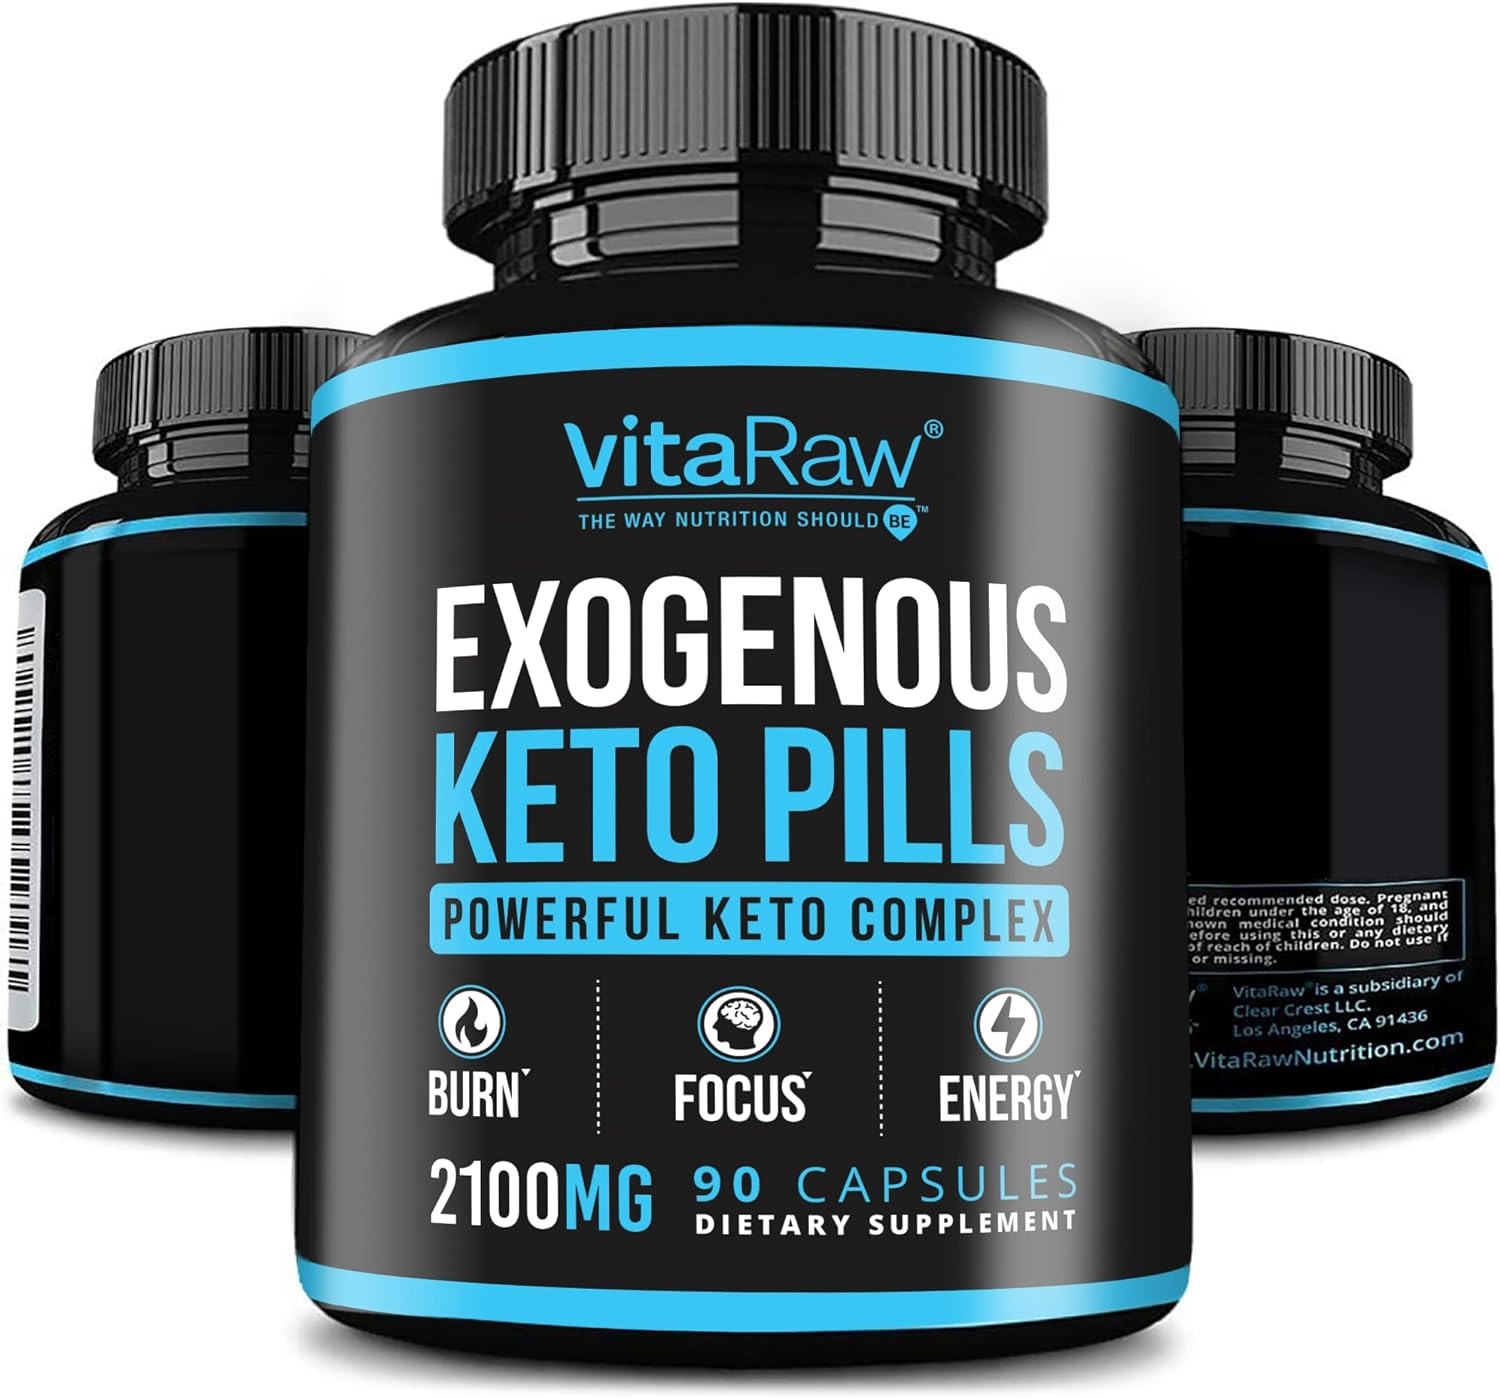 VitaRaw Exogenous Keto Pills - (3X Powerful Dose | 2100mg Keto BHB) Best Keto Burn Diet Pills - Advanced Ketones BHB Supplement - Max Strength Keto Diet Pills for Women + Men - 90 Capsules